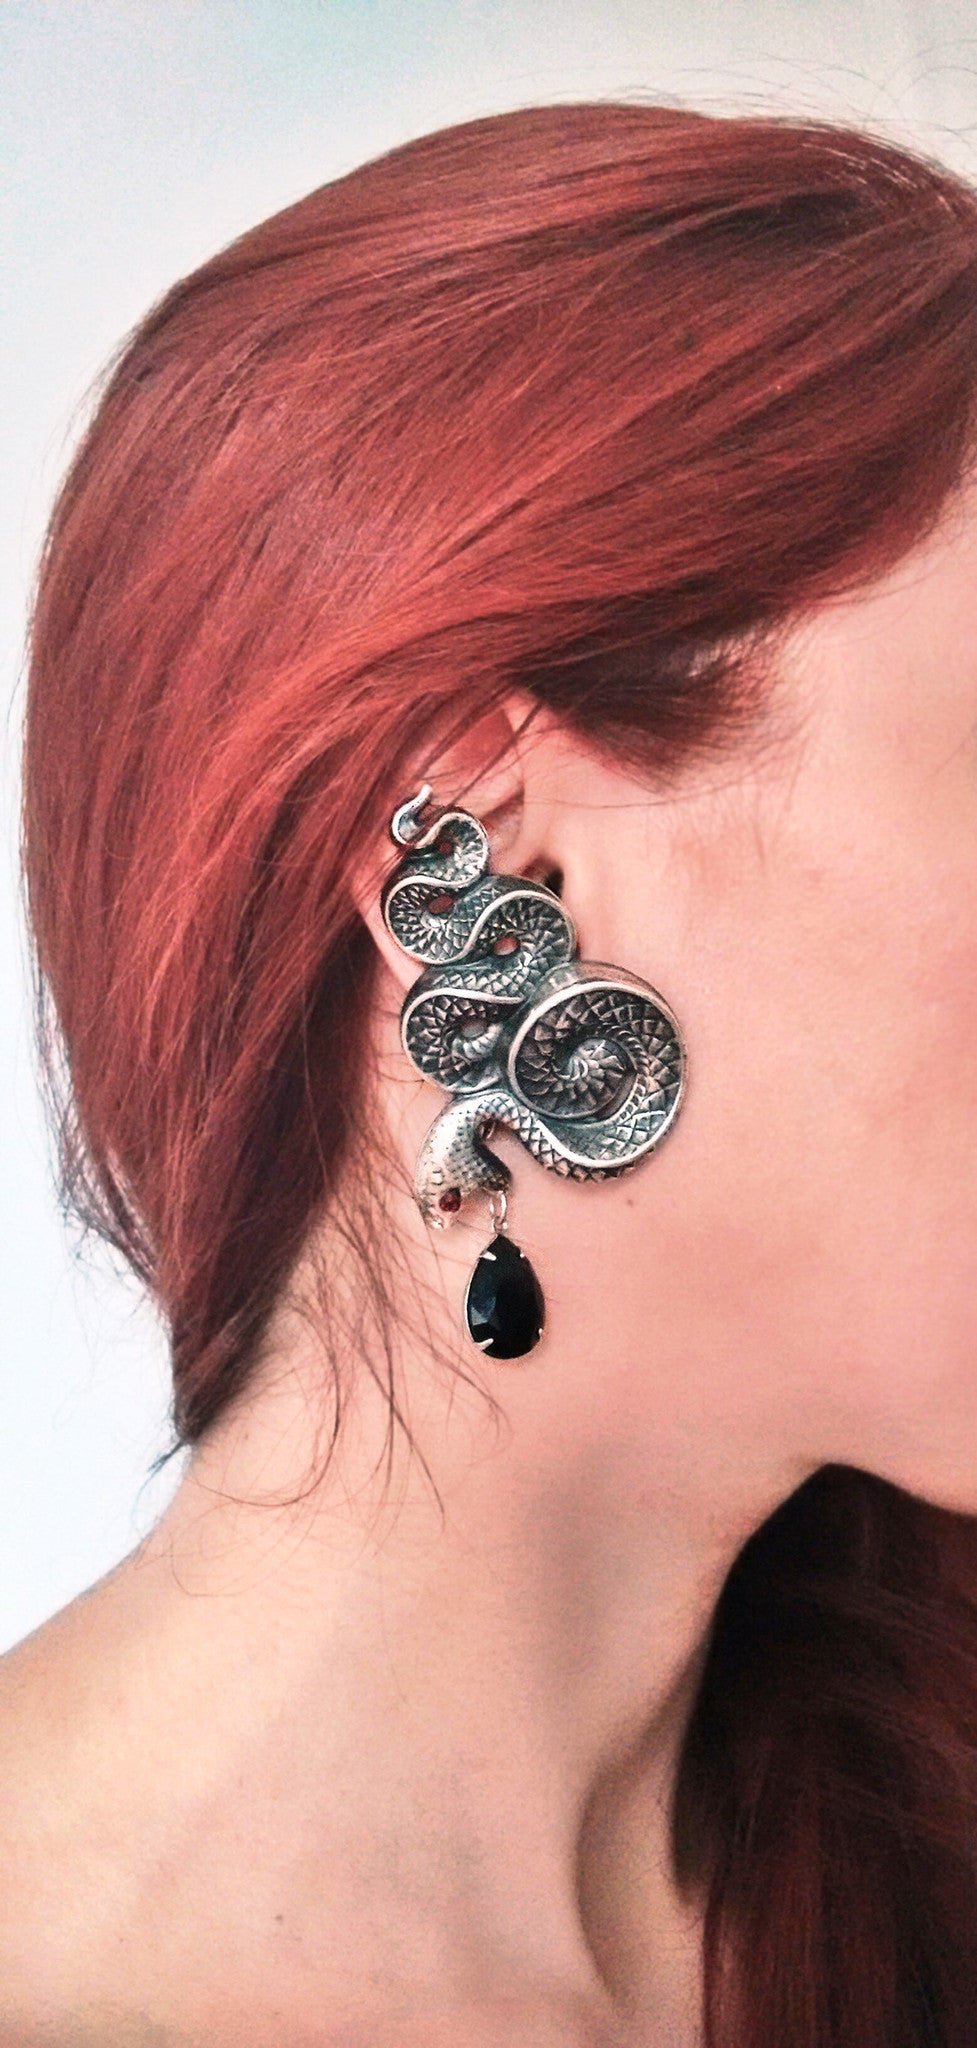 Large Gothic Silver Snake Earrings - Aranwen's Jewelry